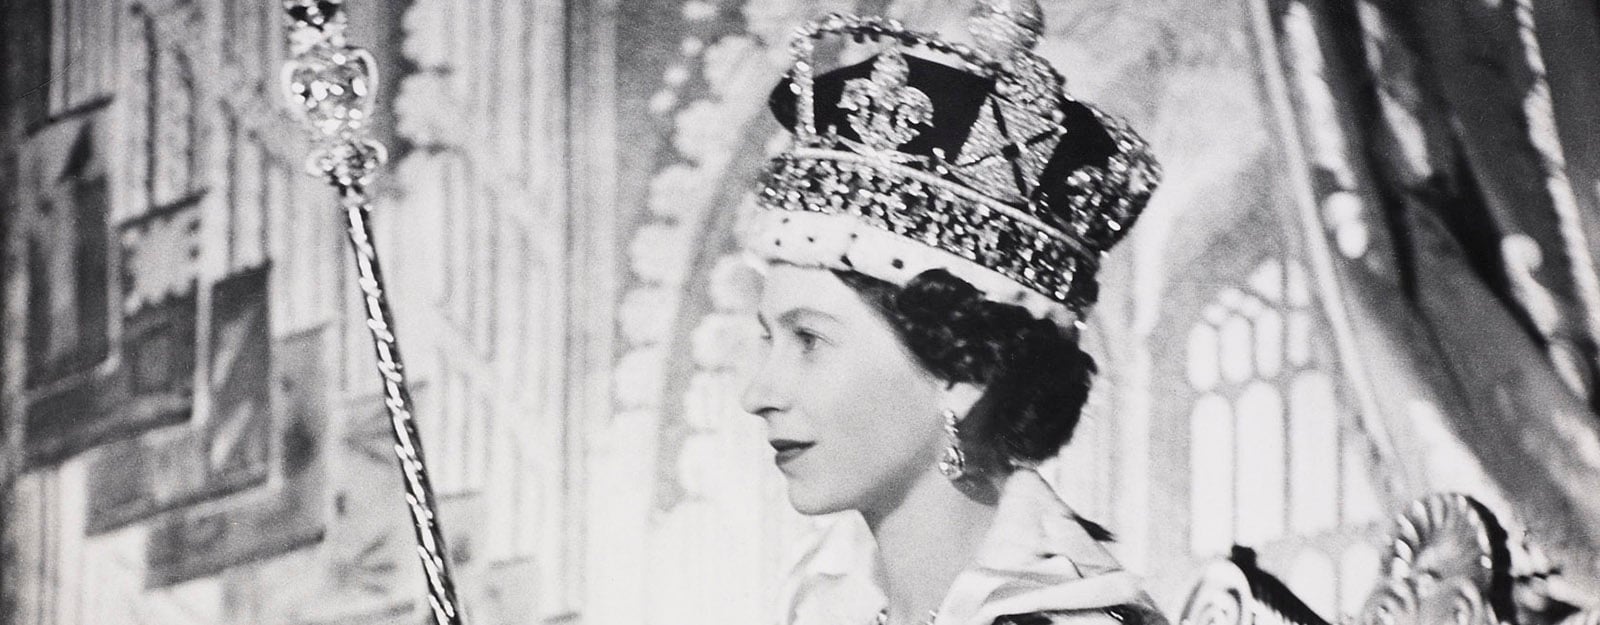 Photograph of Queen Elizabeth II wearing coronation robes and holding Coronation Regalia.